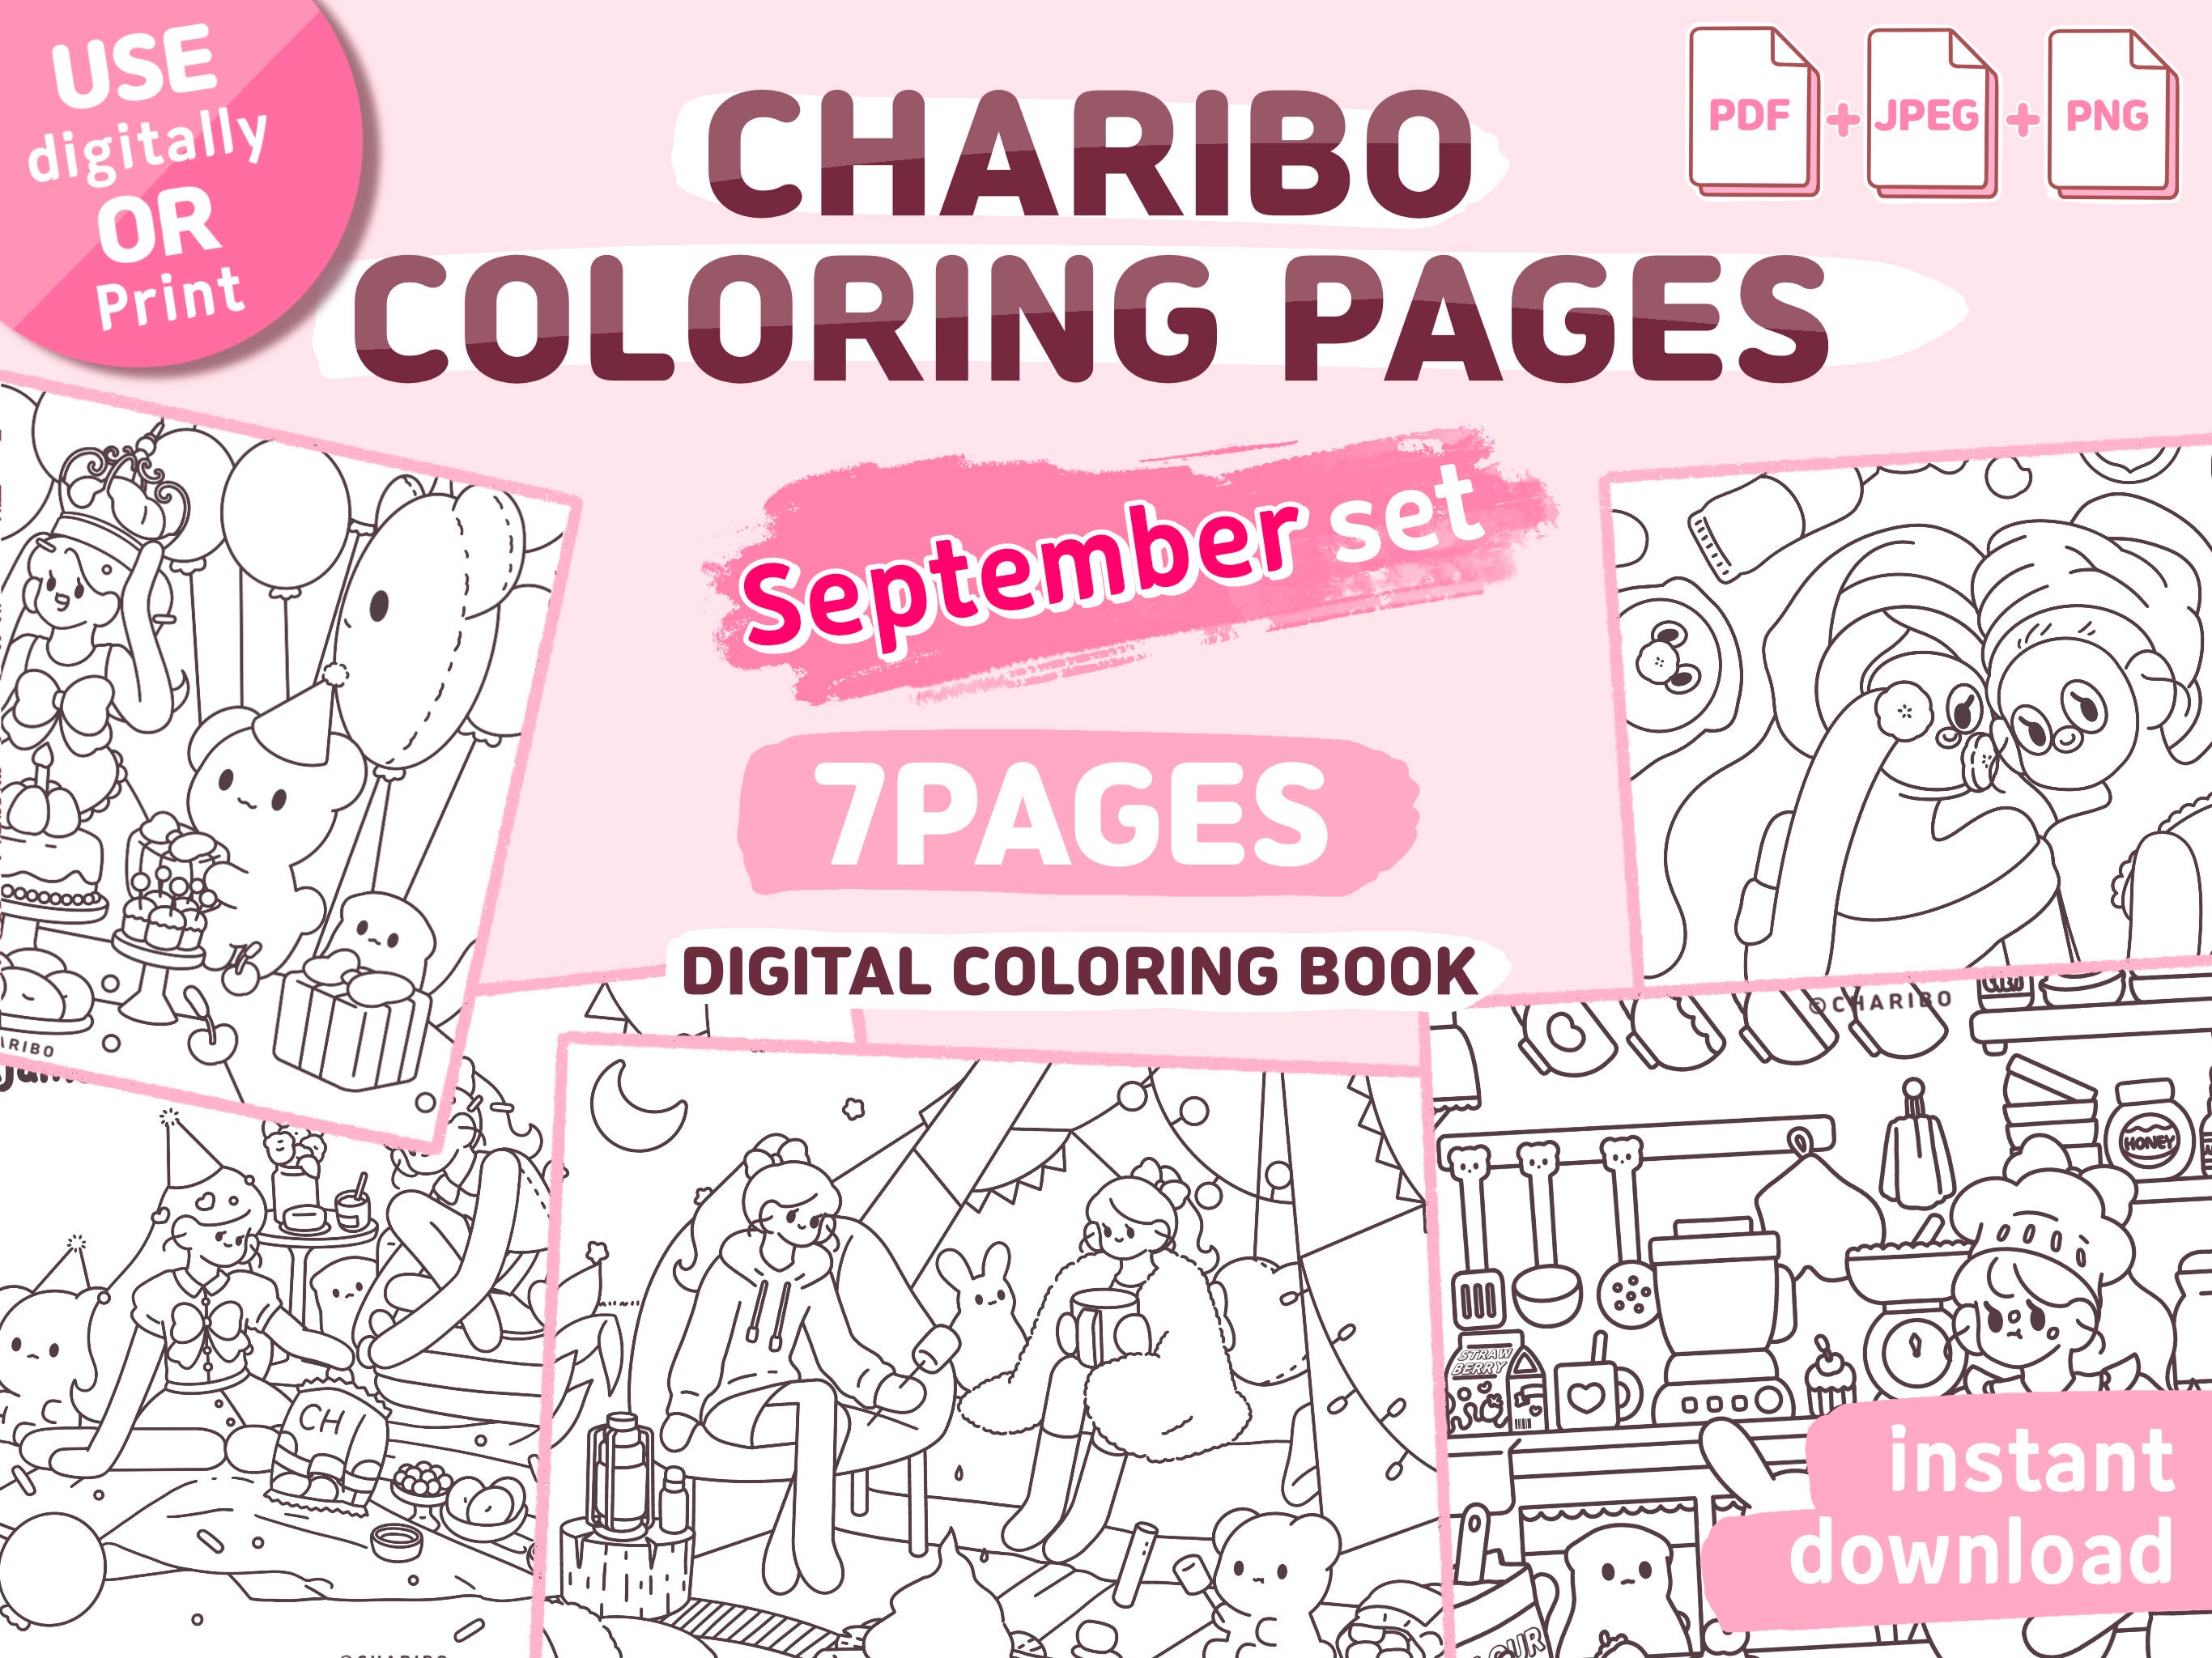 Charibo art september set digital coloring book printable coloring pages adult coloring sheet kids coloring sheet coloring template